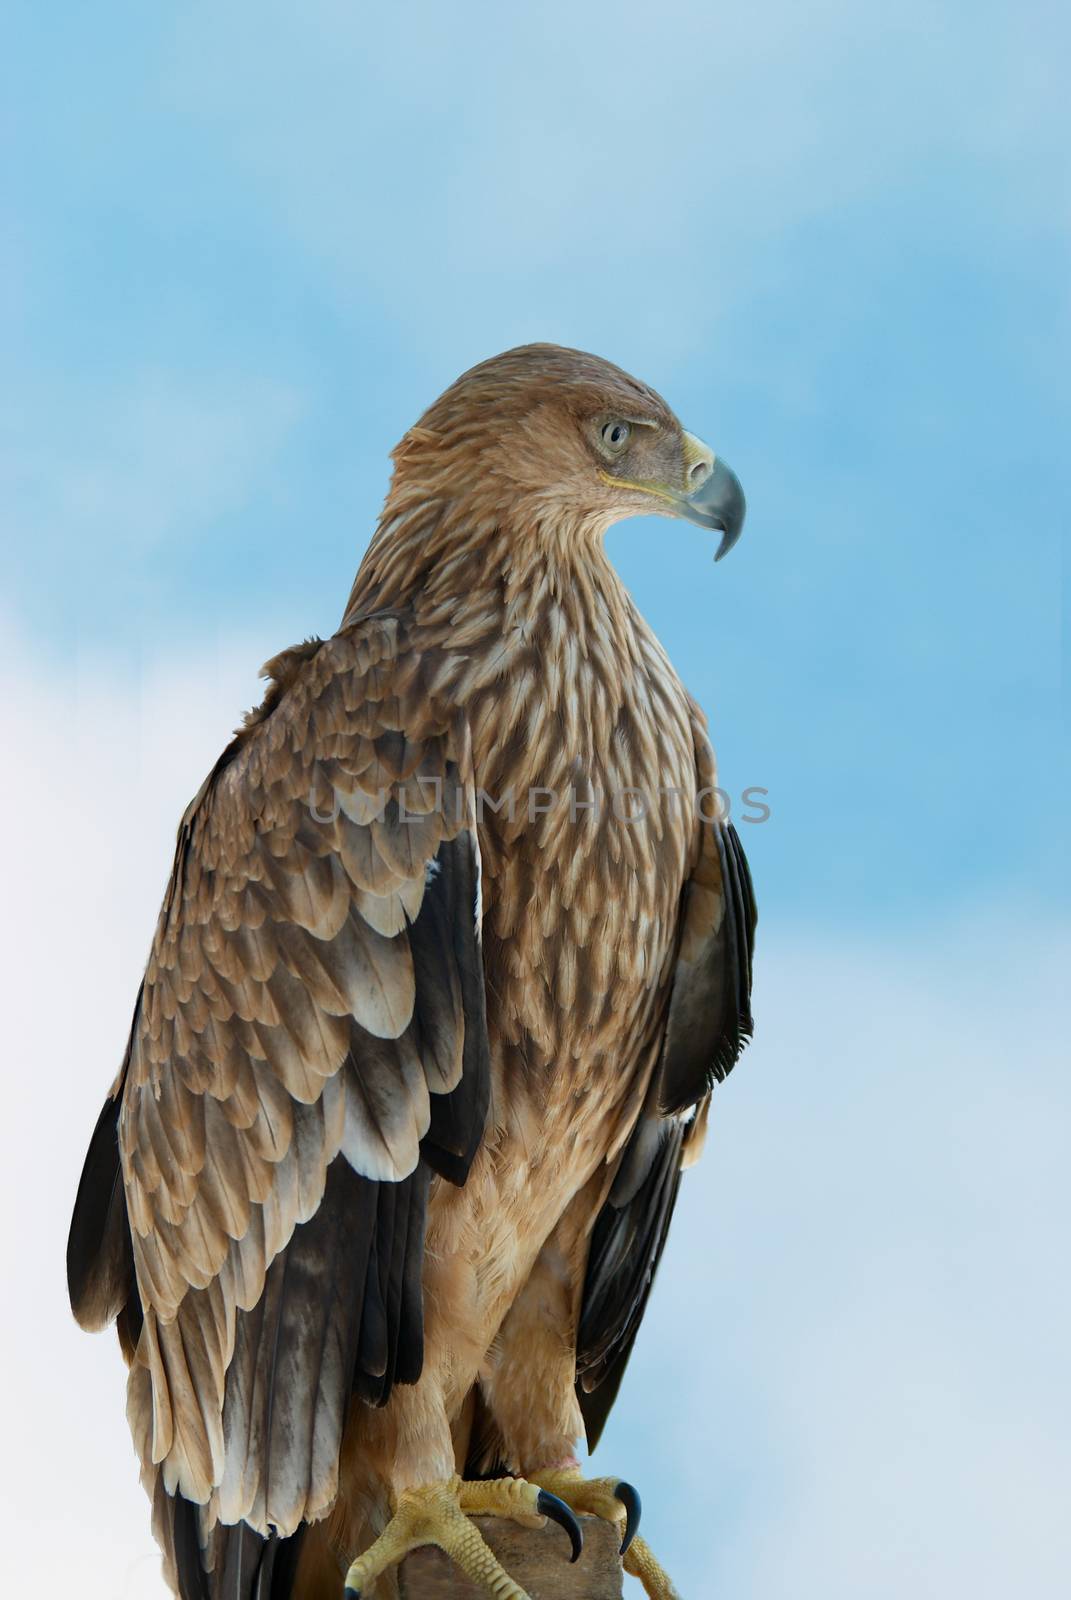 A hawk eagle on the blue sky background.